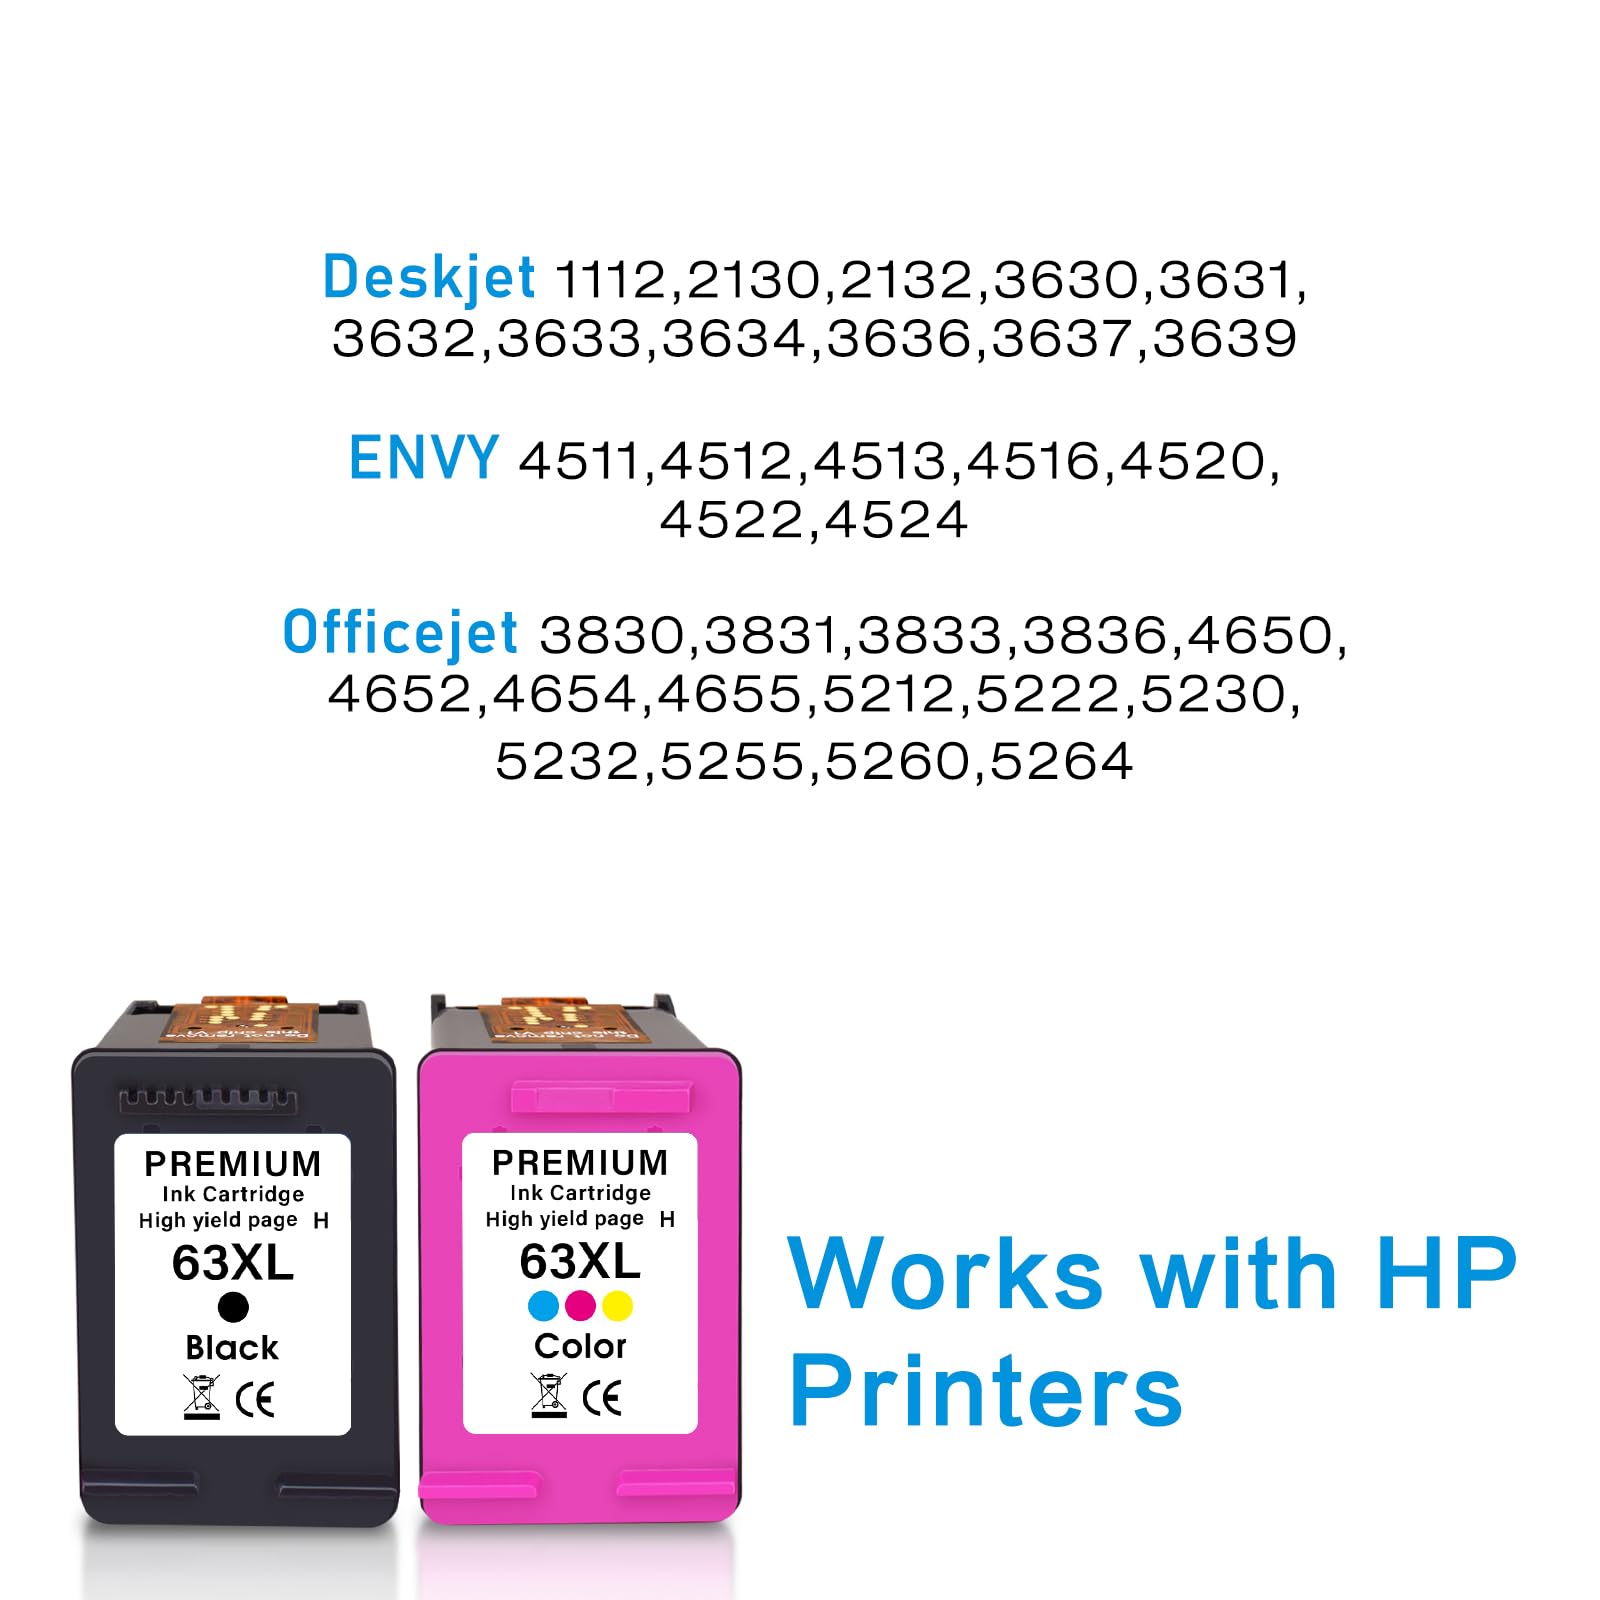 63 XL High Yield Ink Cartridge Combo Pack Replacement Compatible for HP 63XL Ink Cartridge for HP Envy 4520 4512 4516; Officejet 3830 4655 5255; Deskjet 1112 2130 3630 Printer (1 Black, 1 Tri-Color)